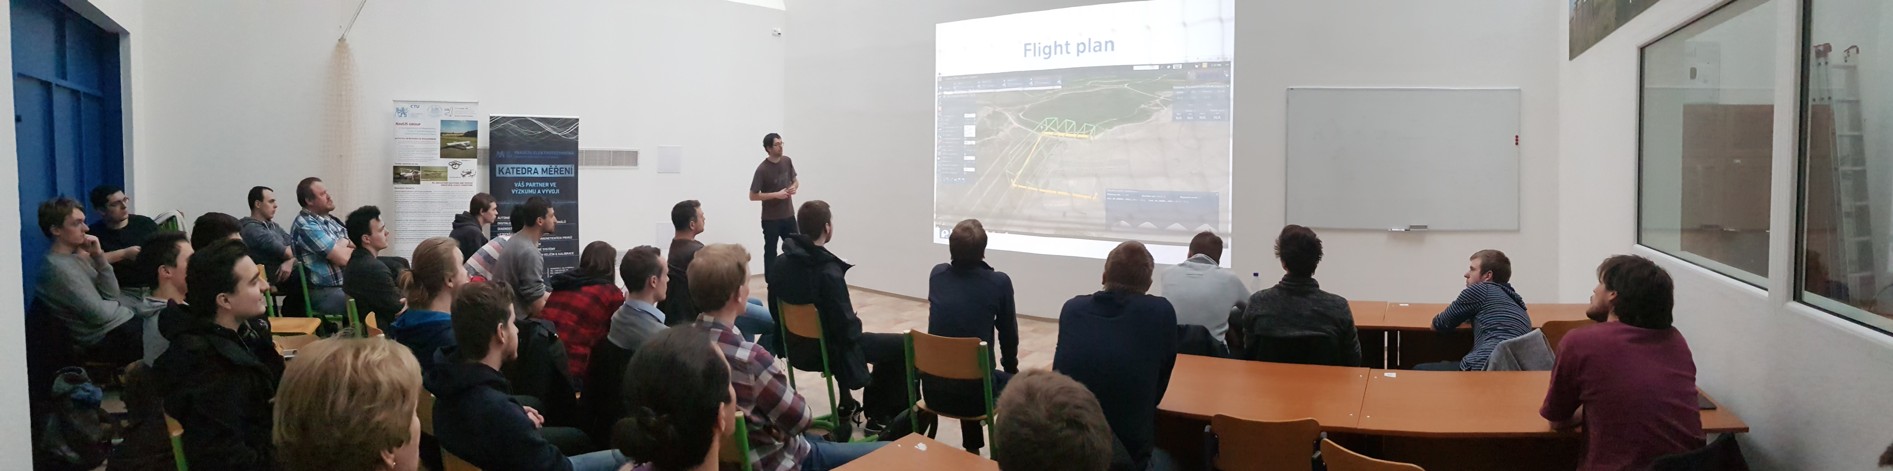 ČVUT Drone Academy - lecture